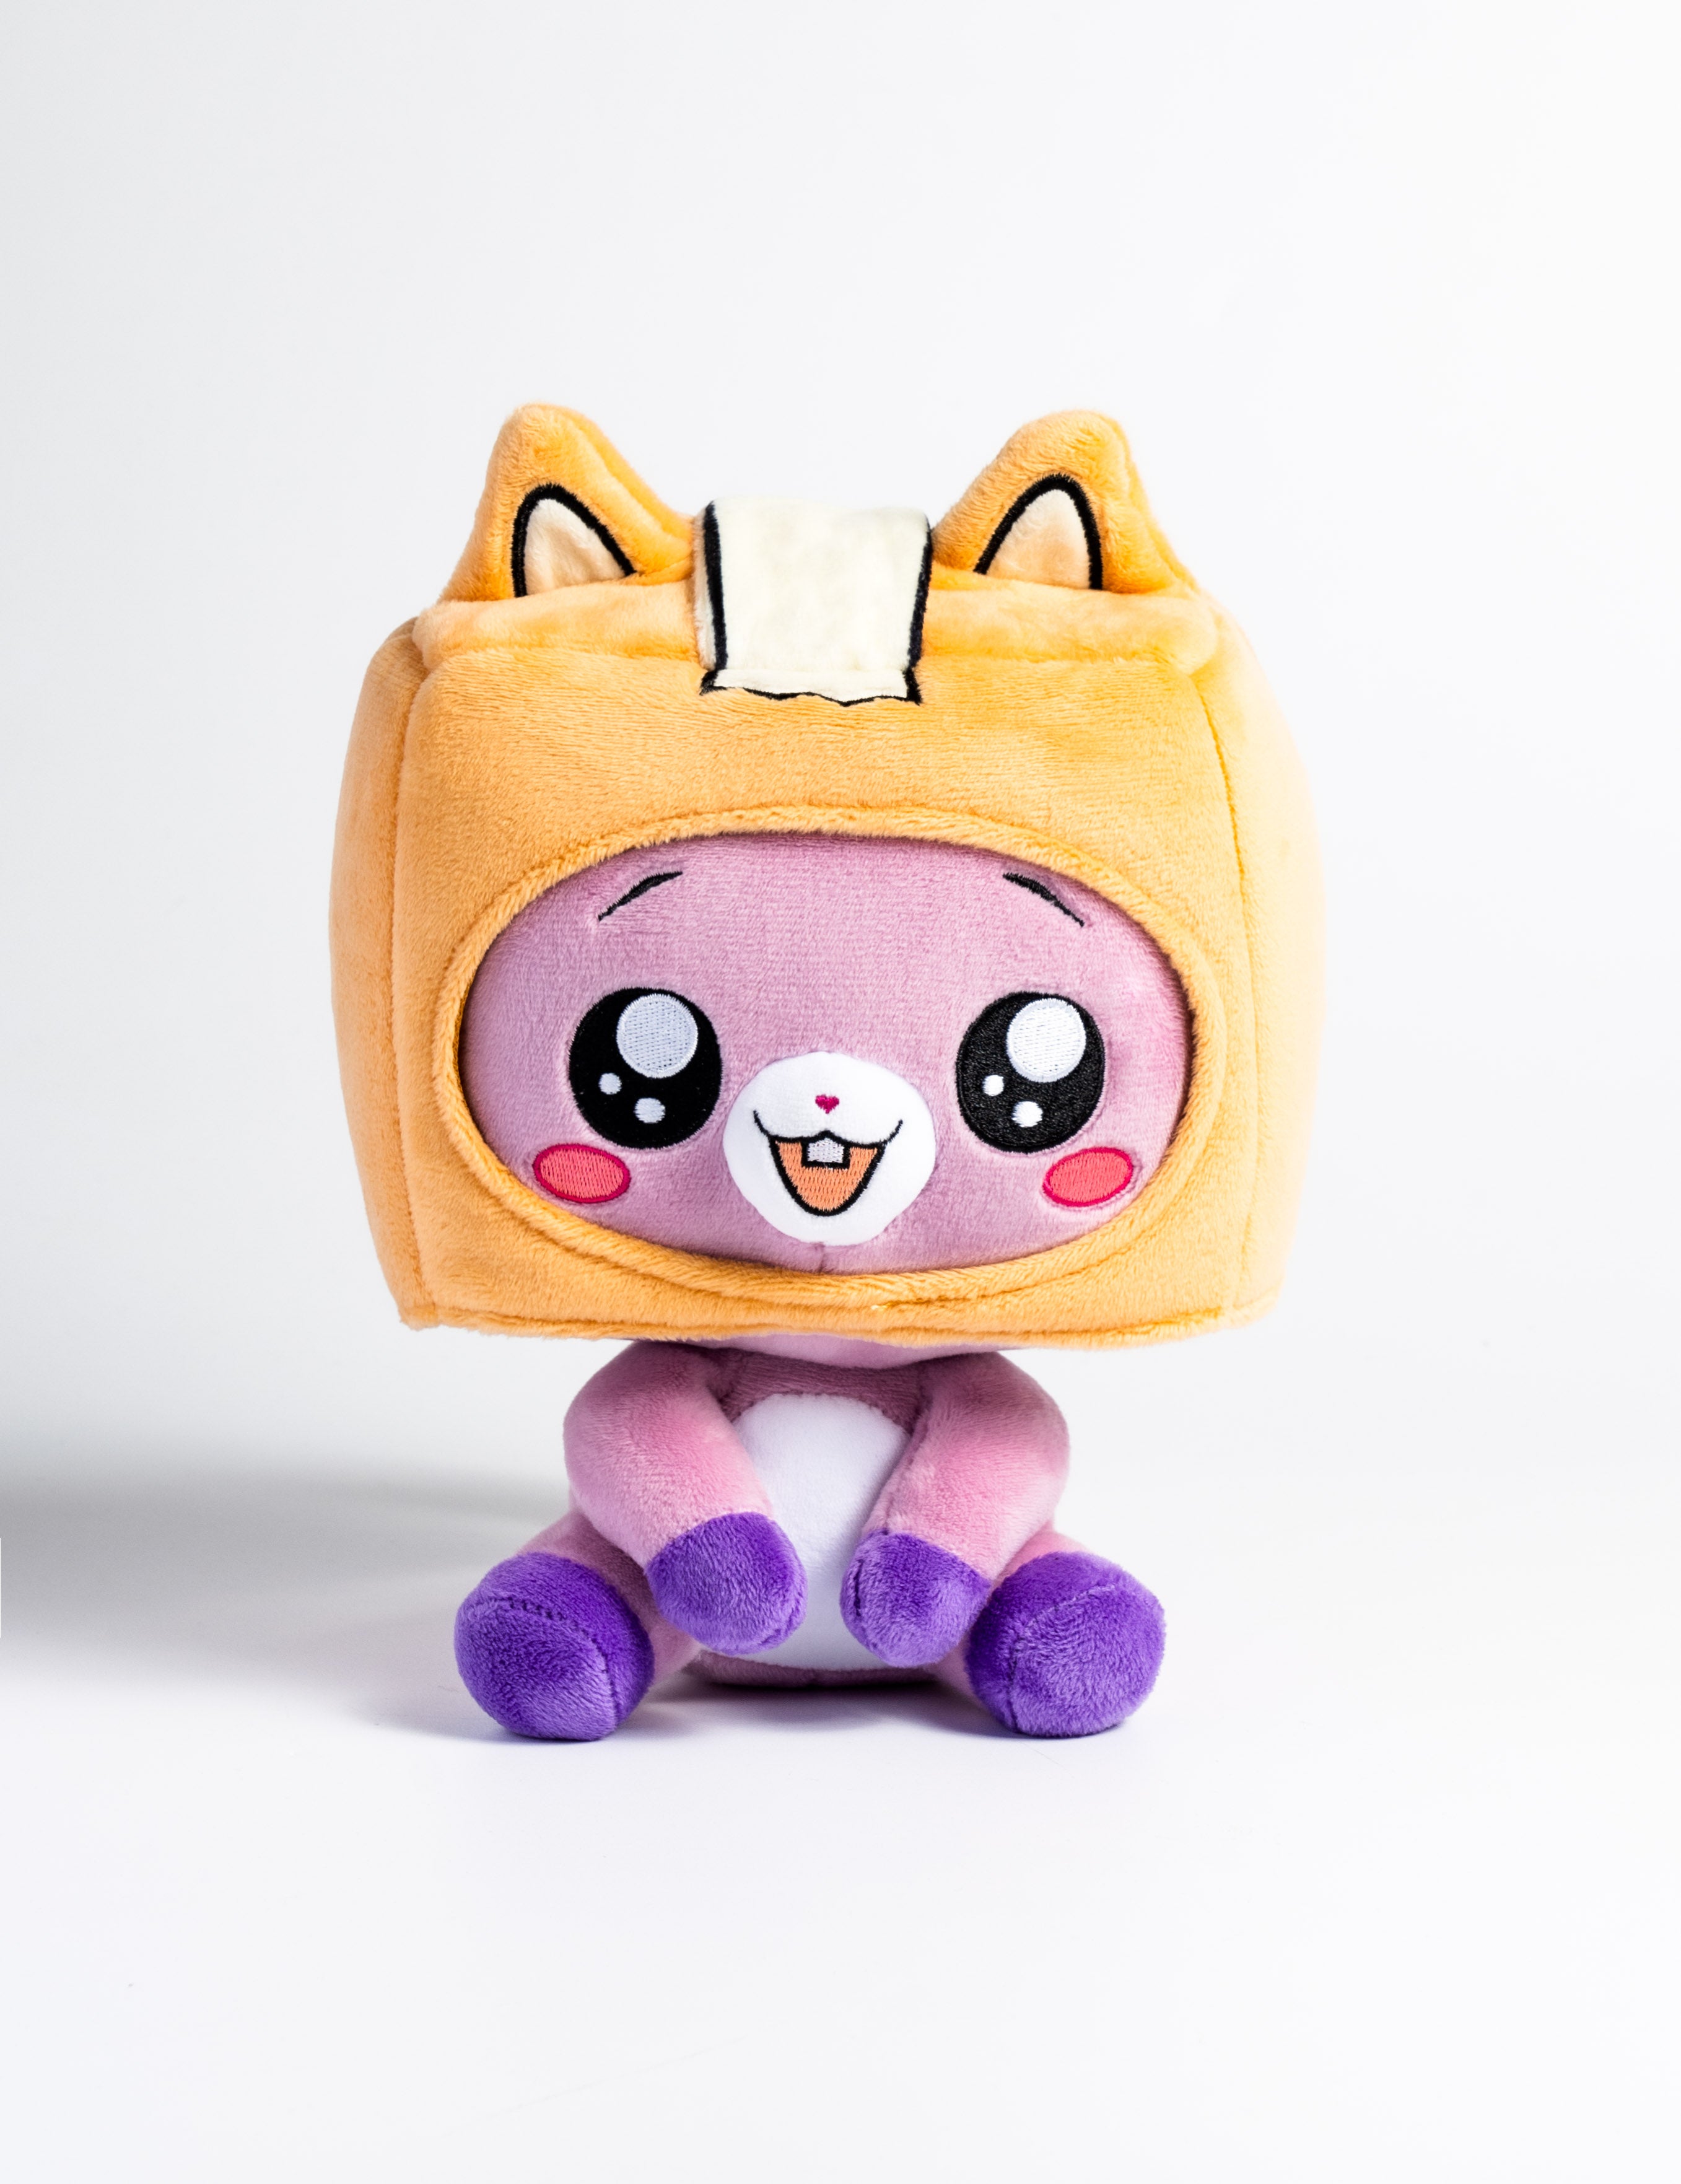 Official LankyBox Merch - Foxy Plush Toy